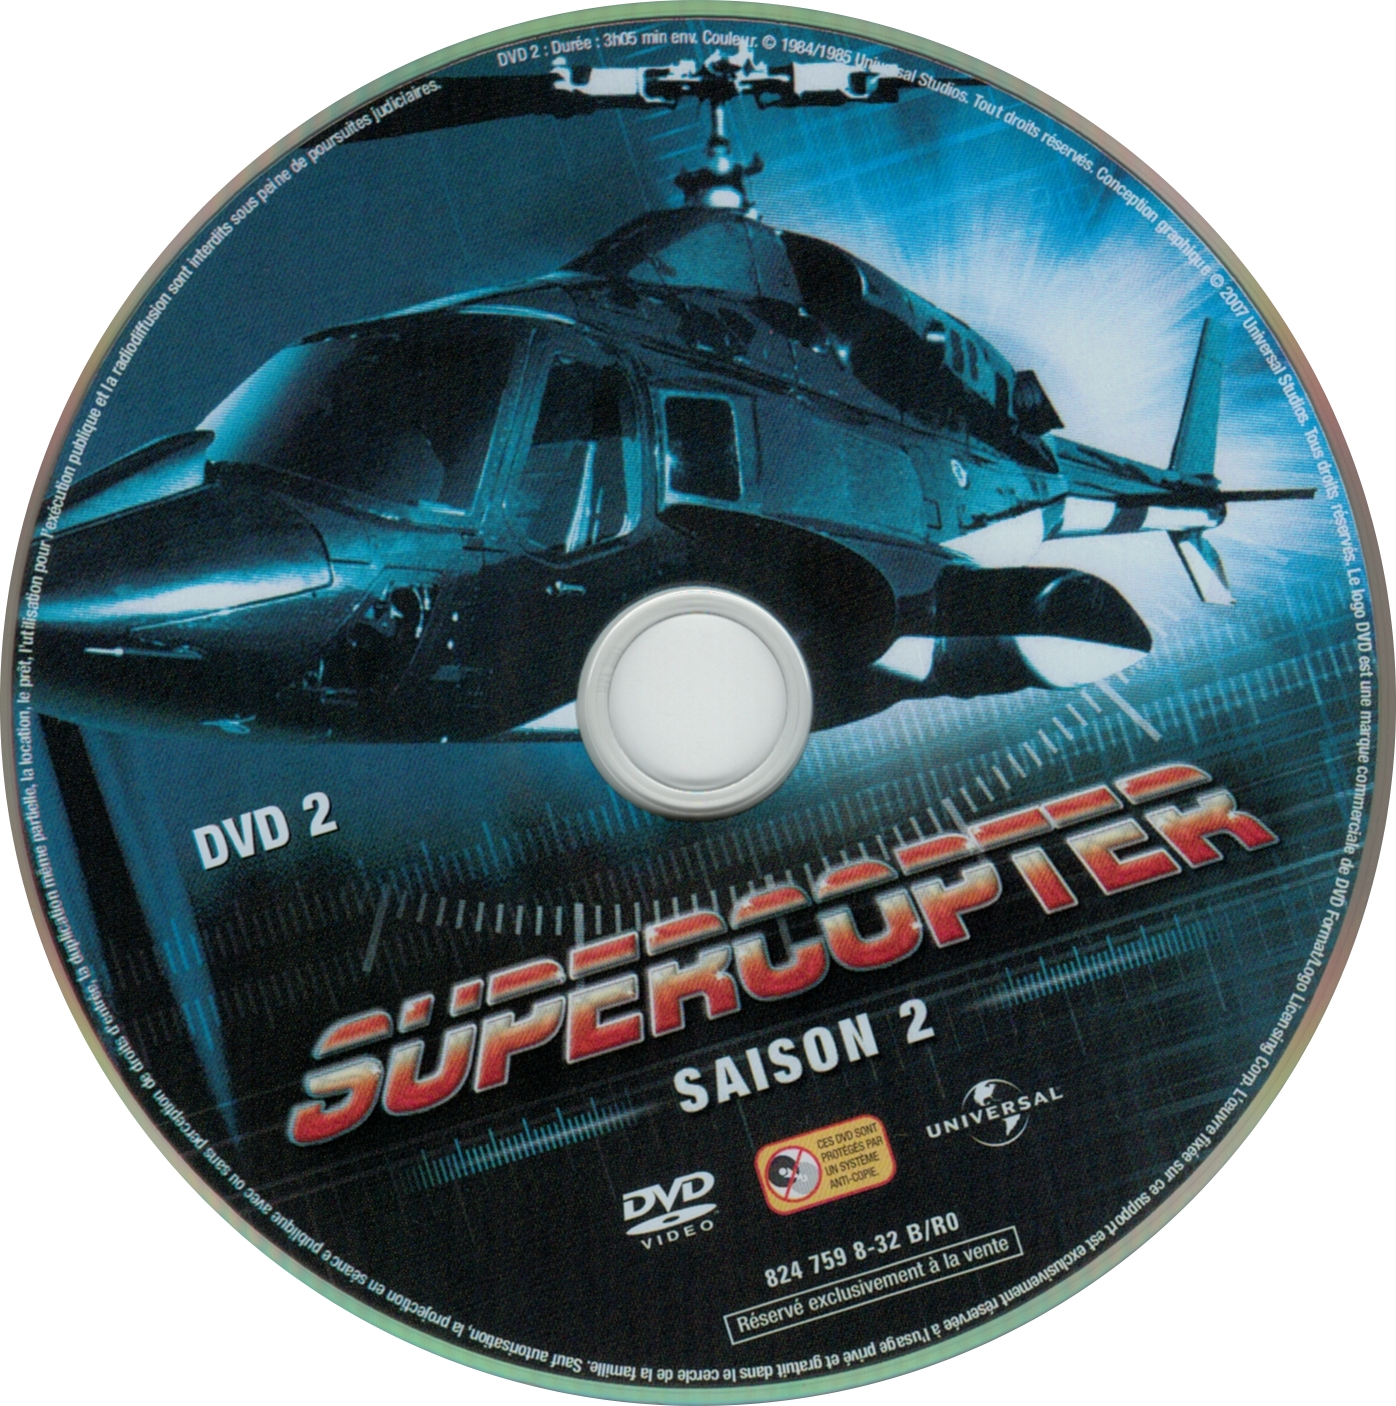 Supercopter Saison 2 DVD 2